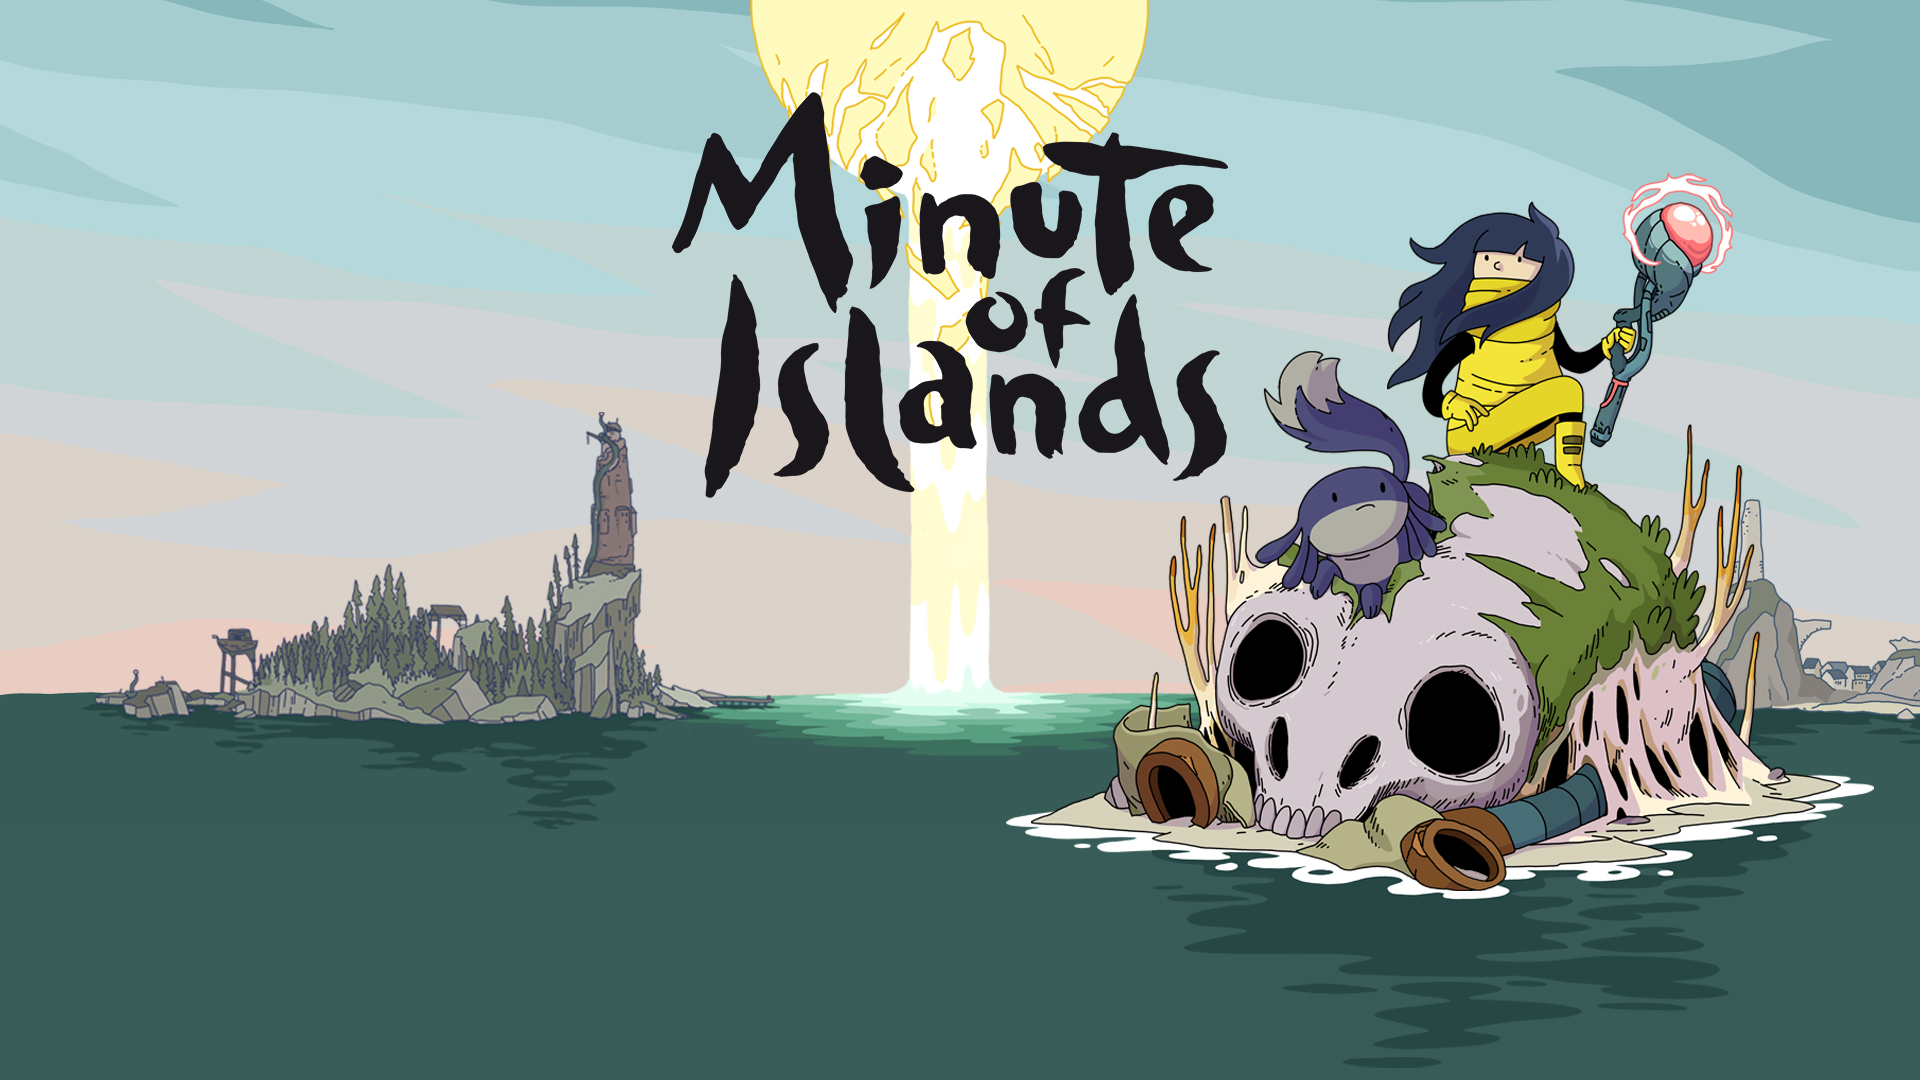 in minute of islands